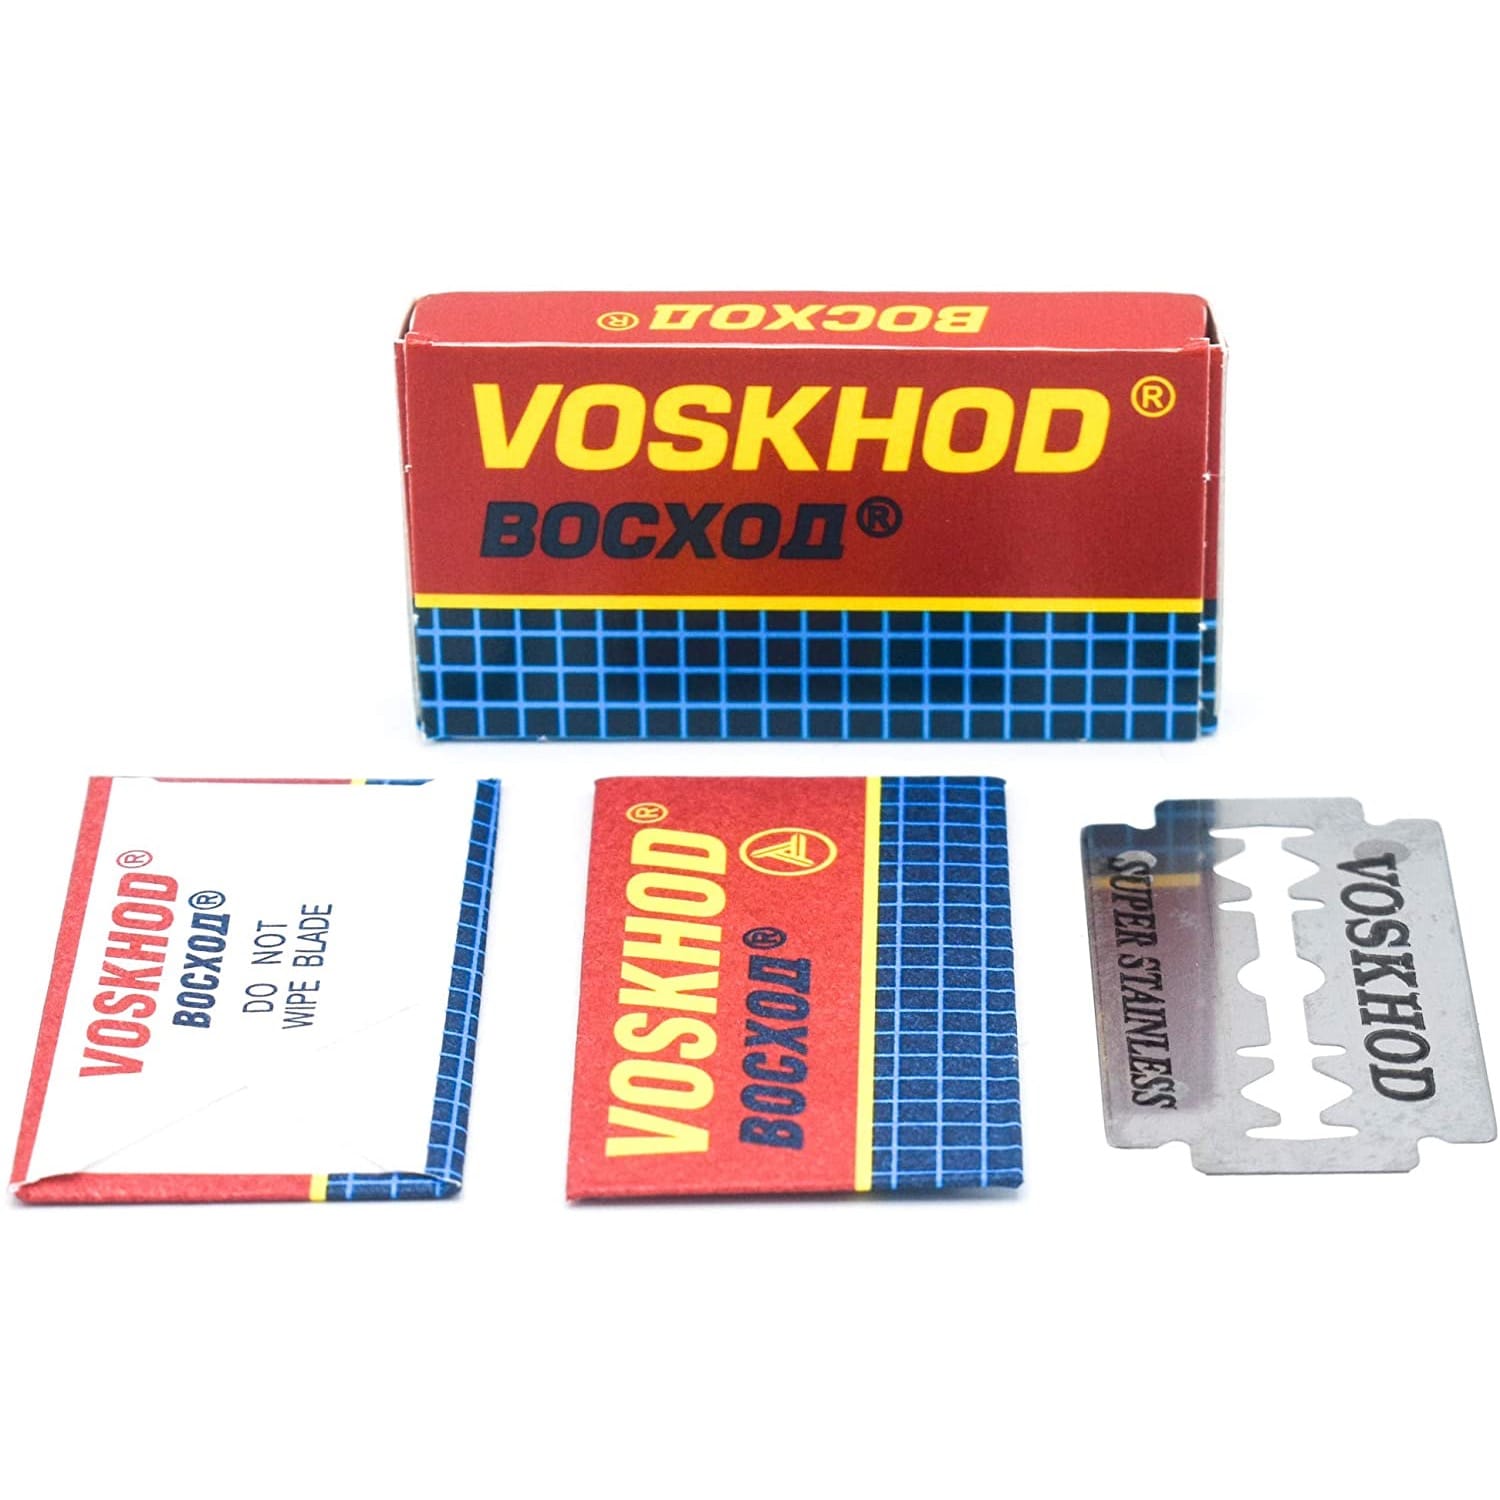 Box - Voskhod Double Edge Blades Teflon Coated